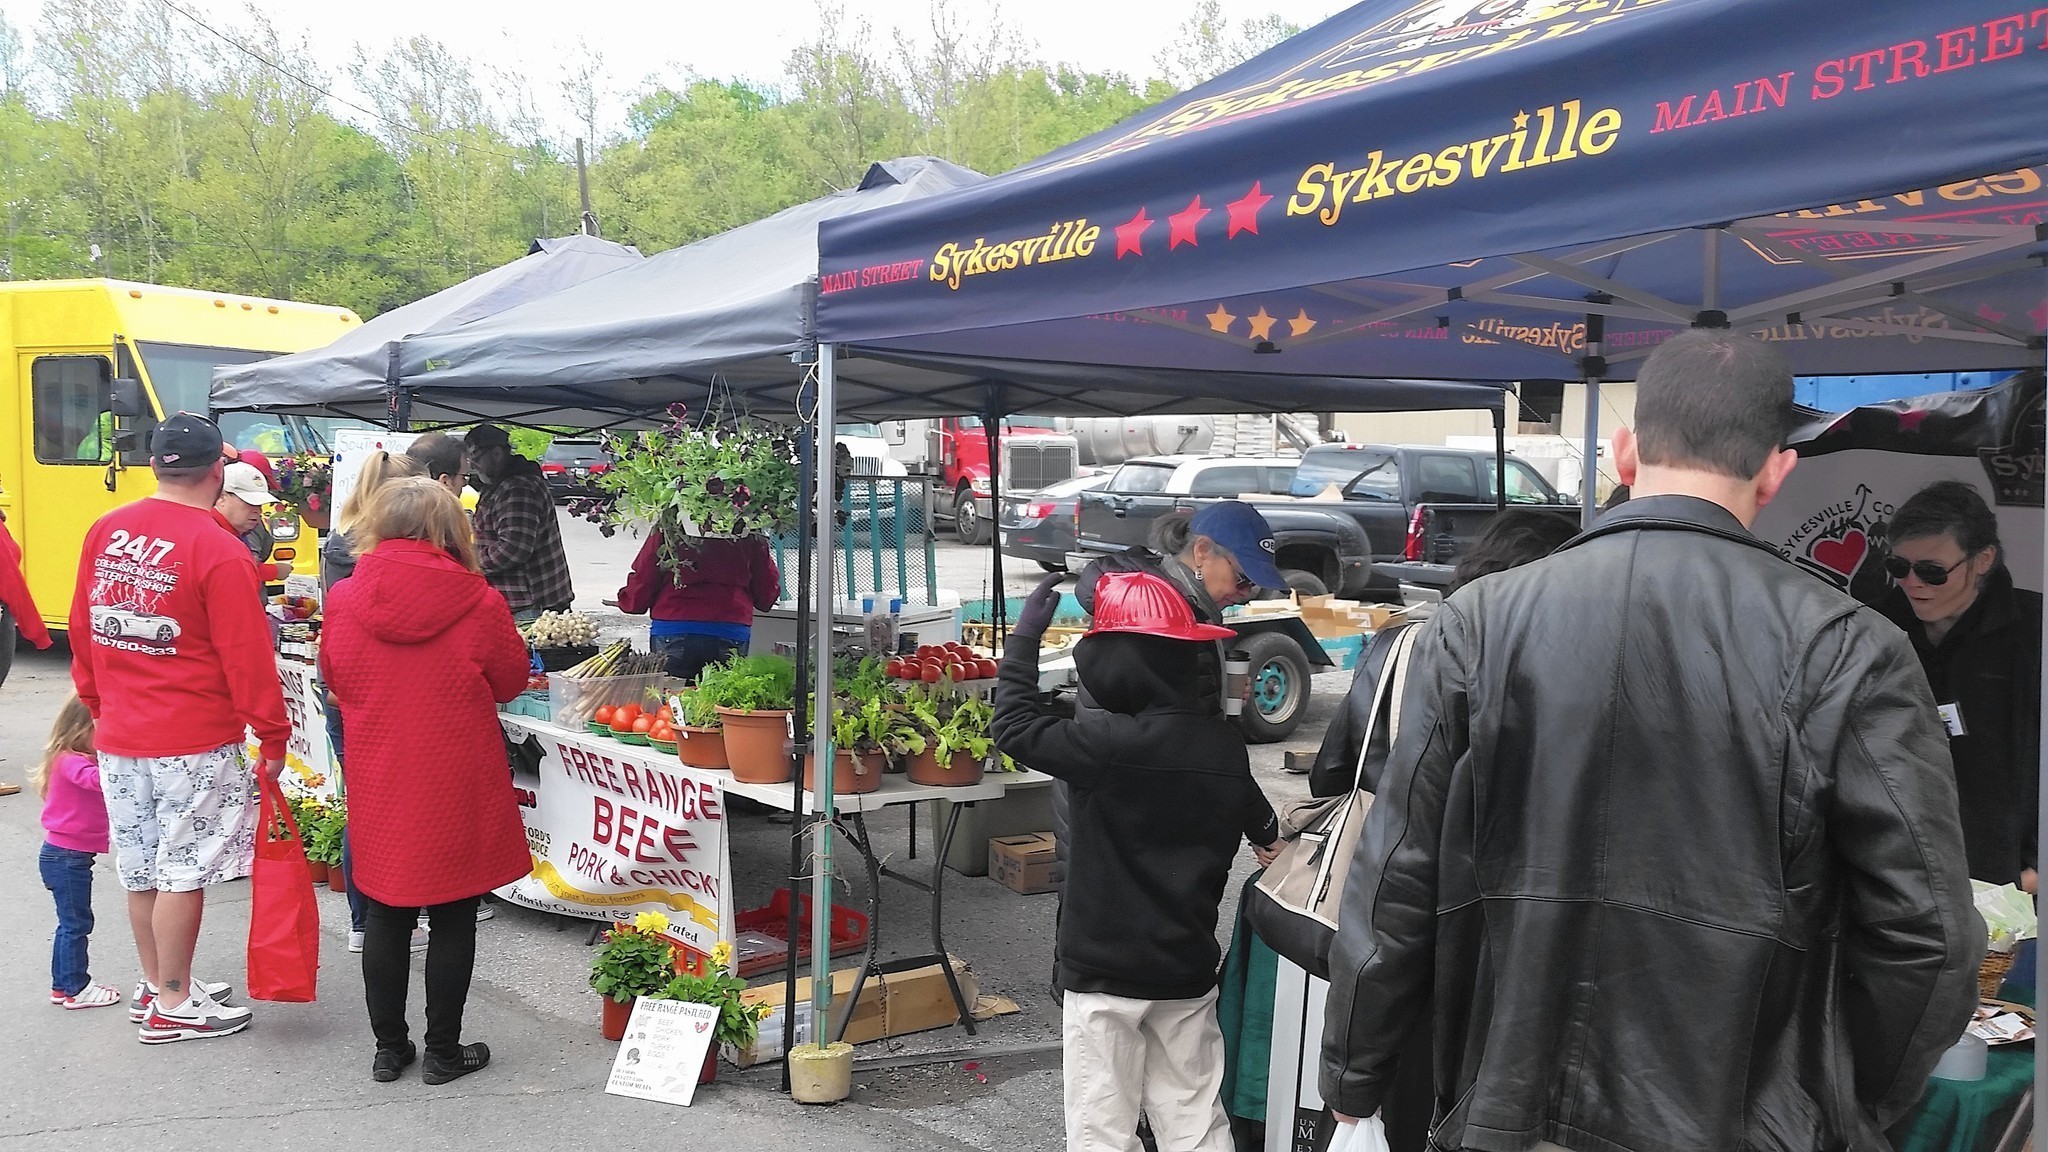 South Carroll Sykesville Farmers Market offers lots of family fun